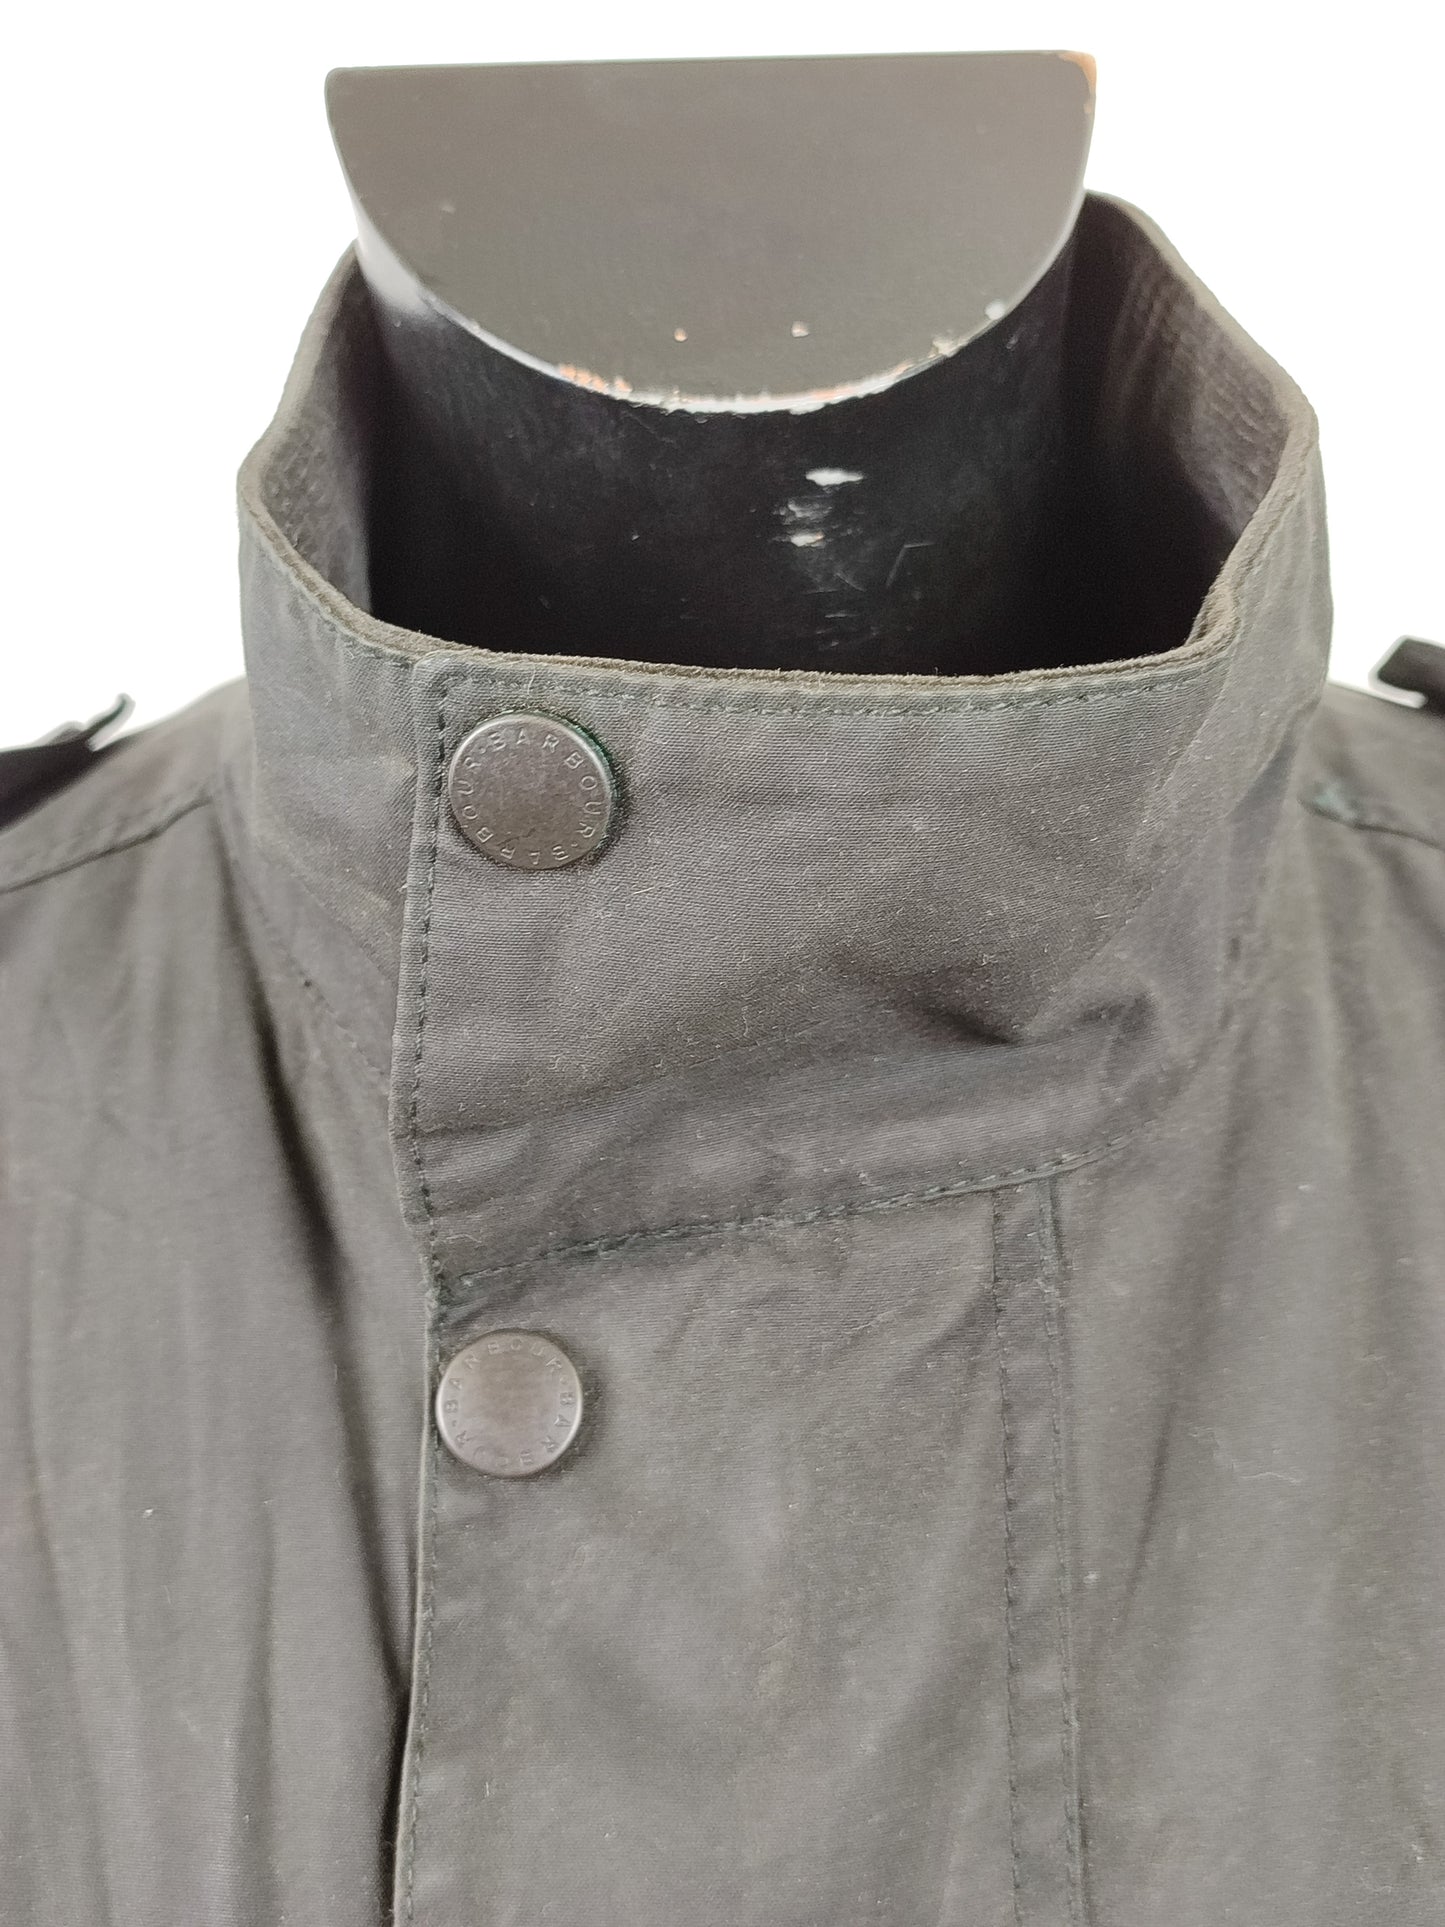 Giacca Barbour da uomo nero cerato Trooper XLarge - Man Trooper Wax Jacket size XL